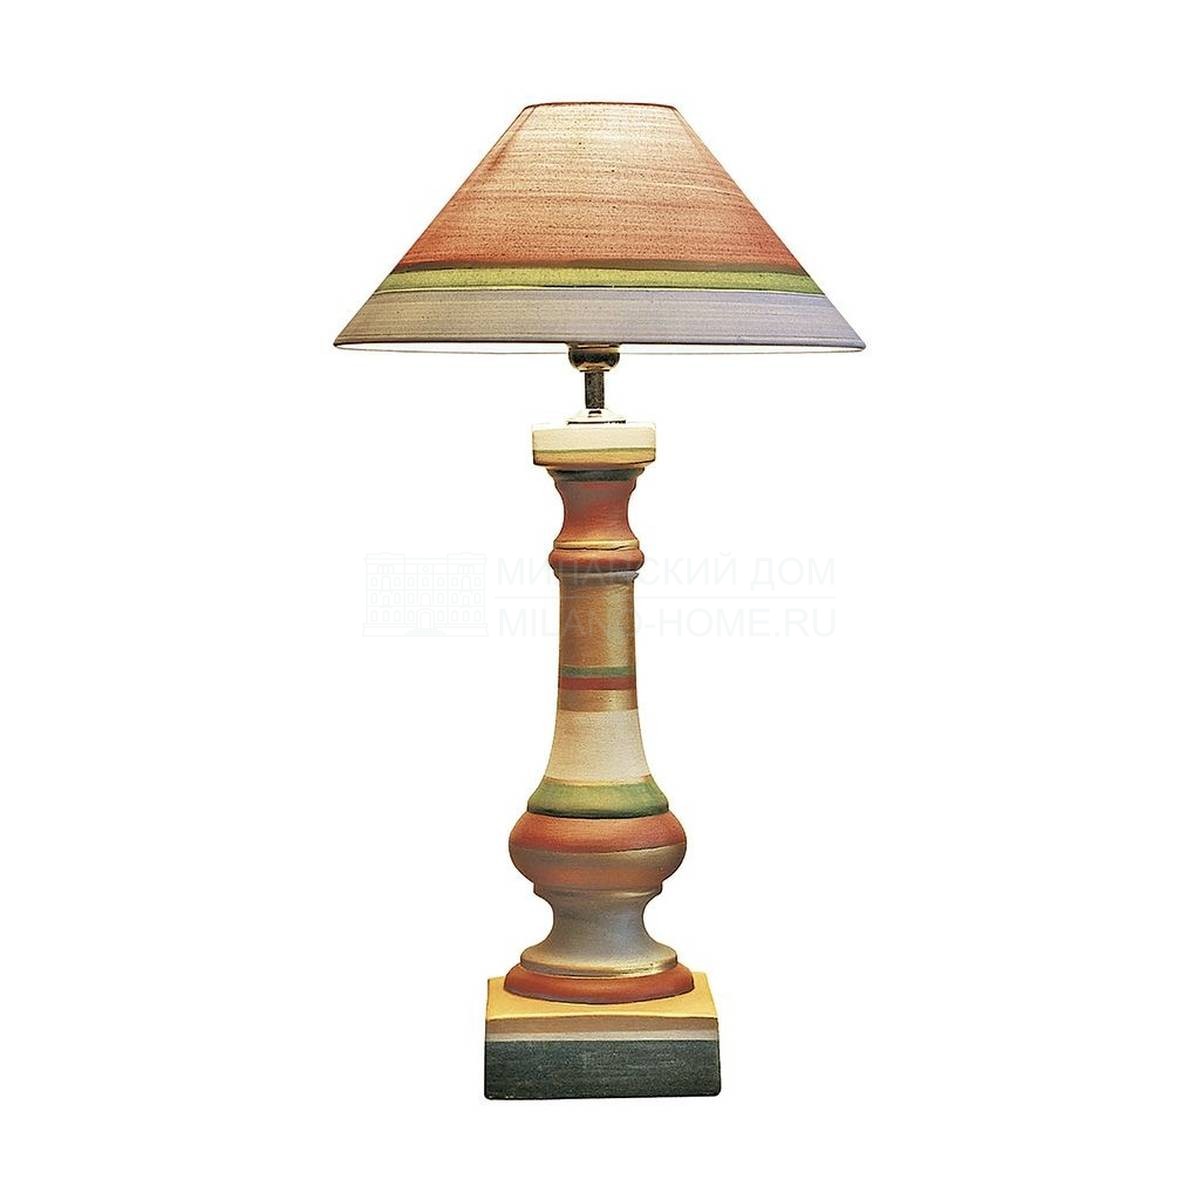 Настольная лампа 751 table lamp из Испании фабрики GUADARTE